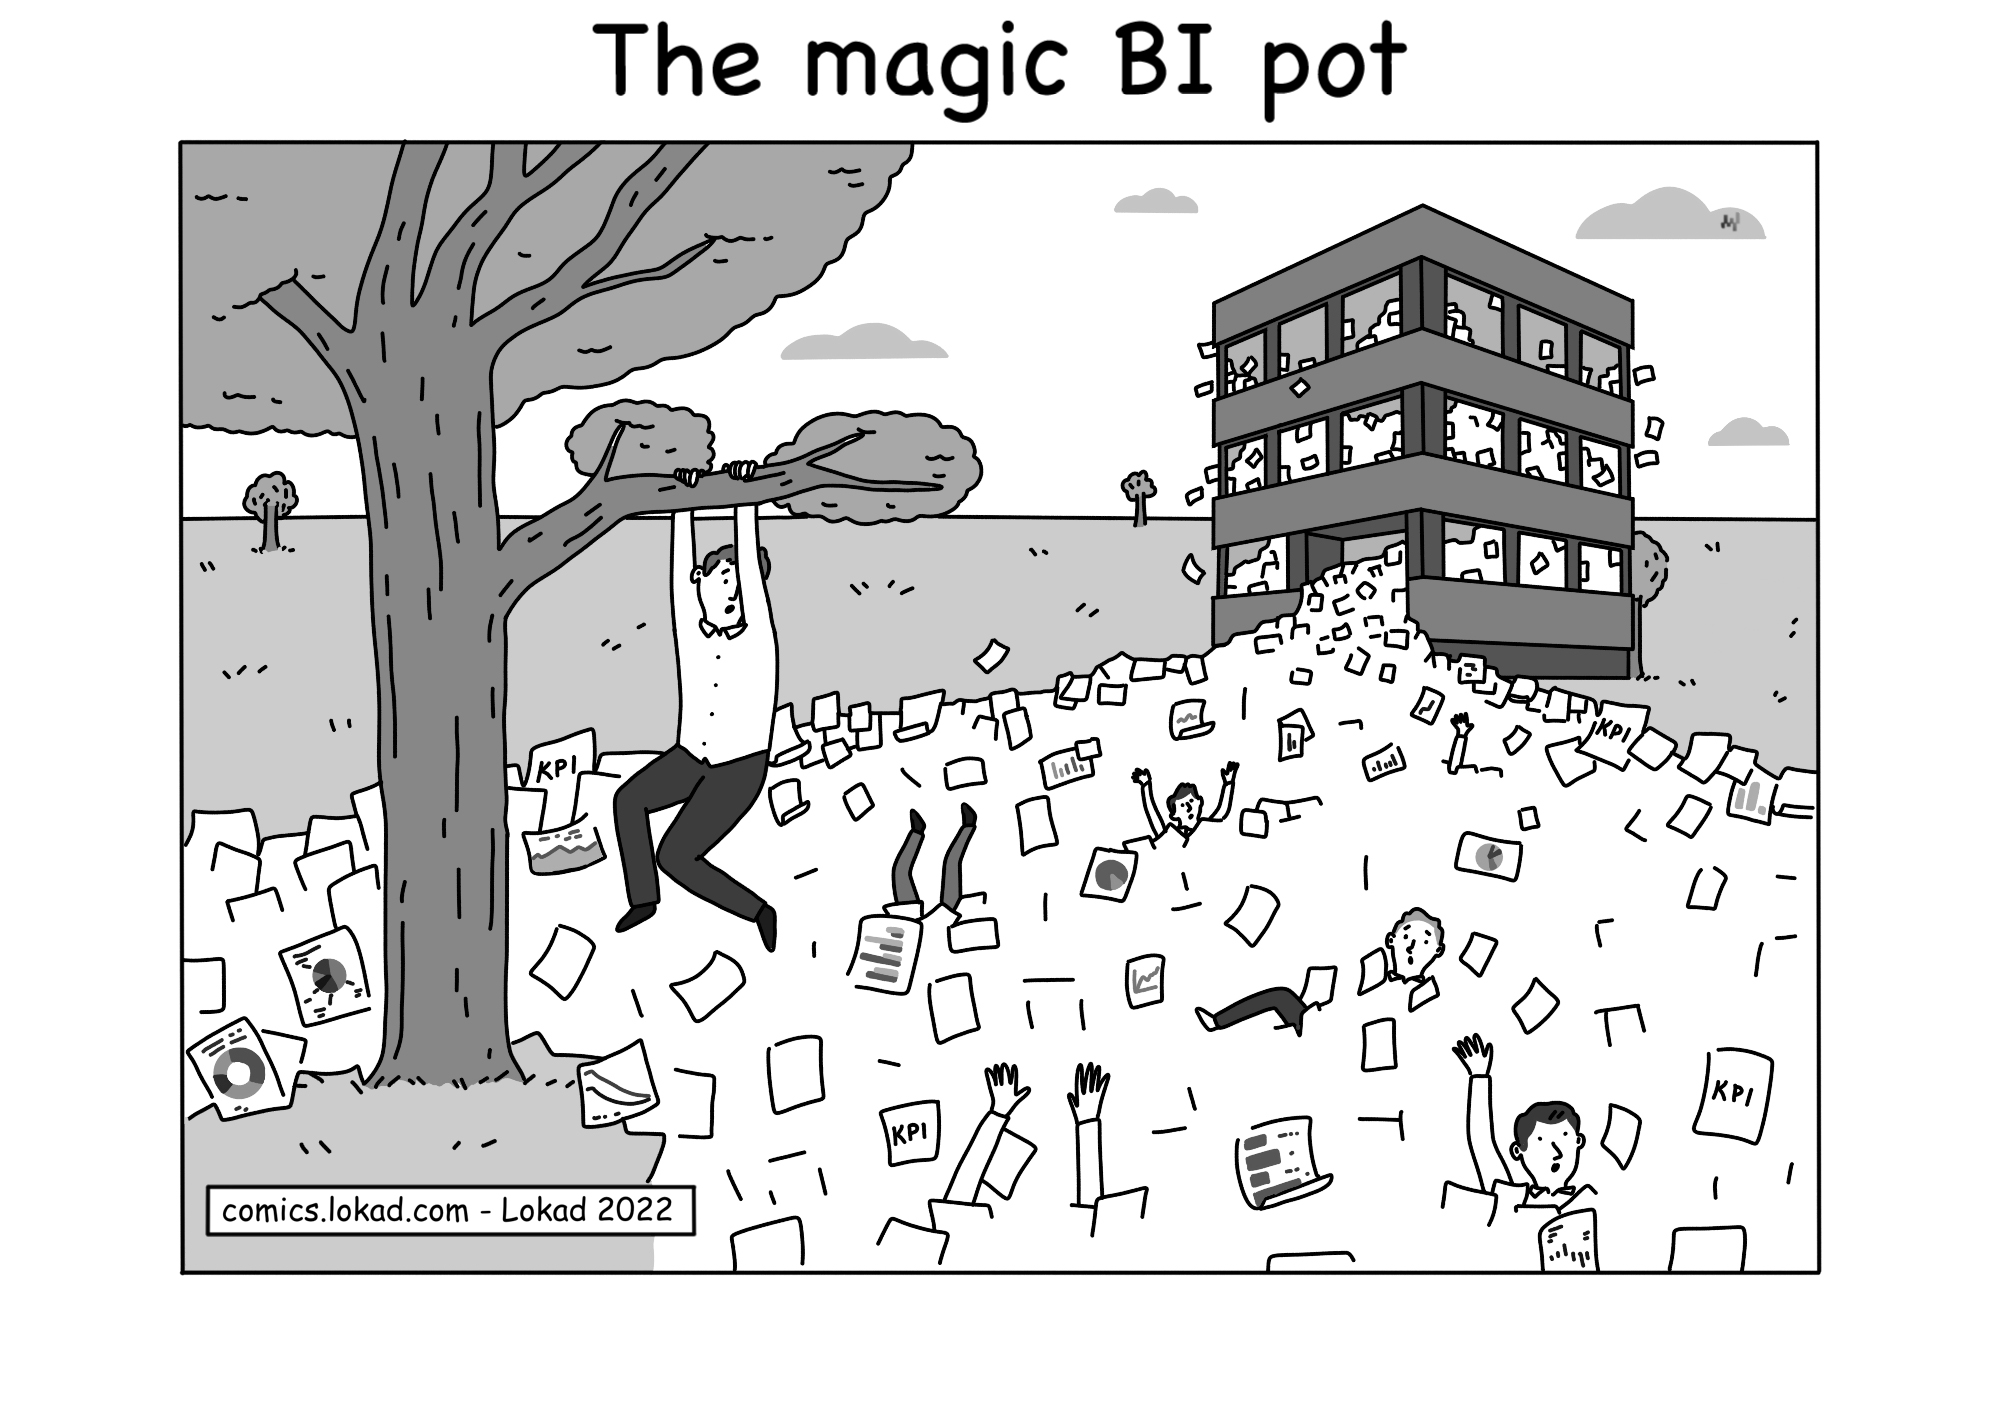 The magic BI pot